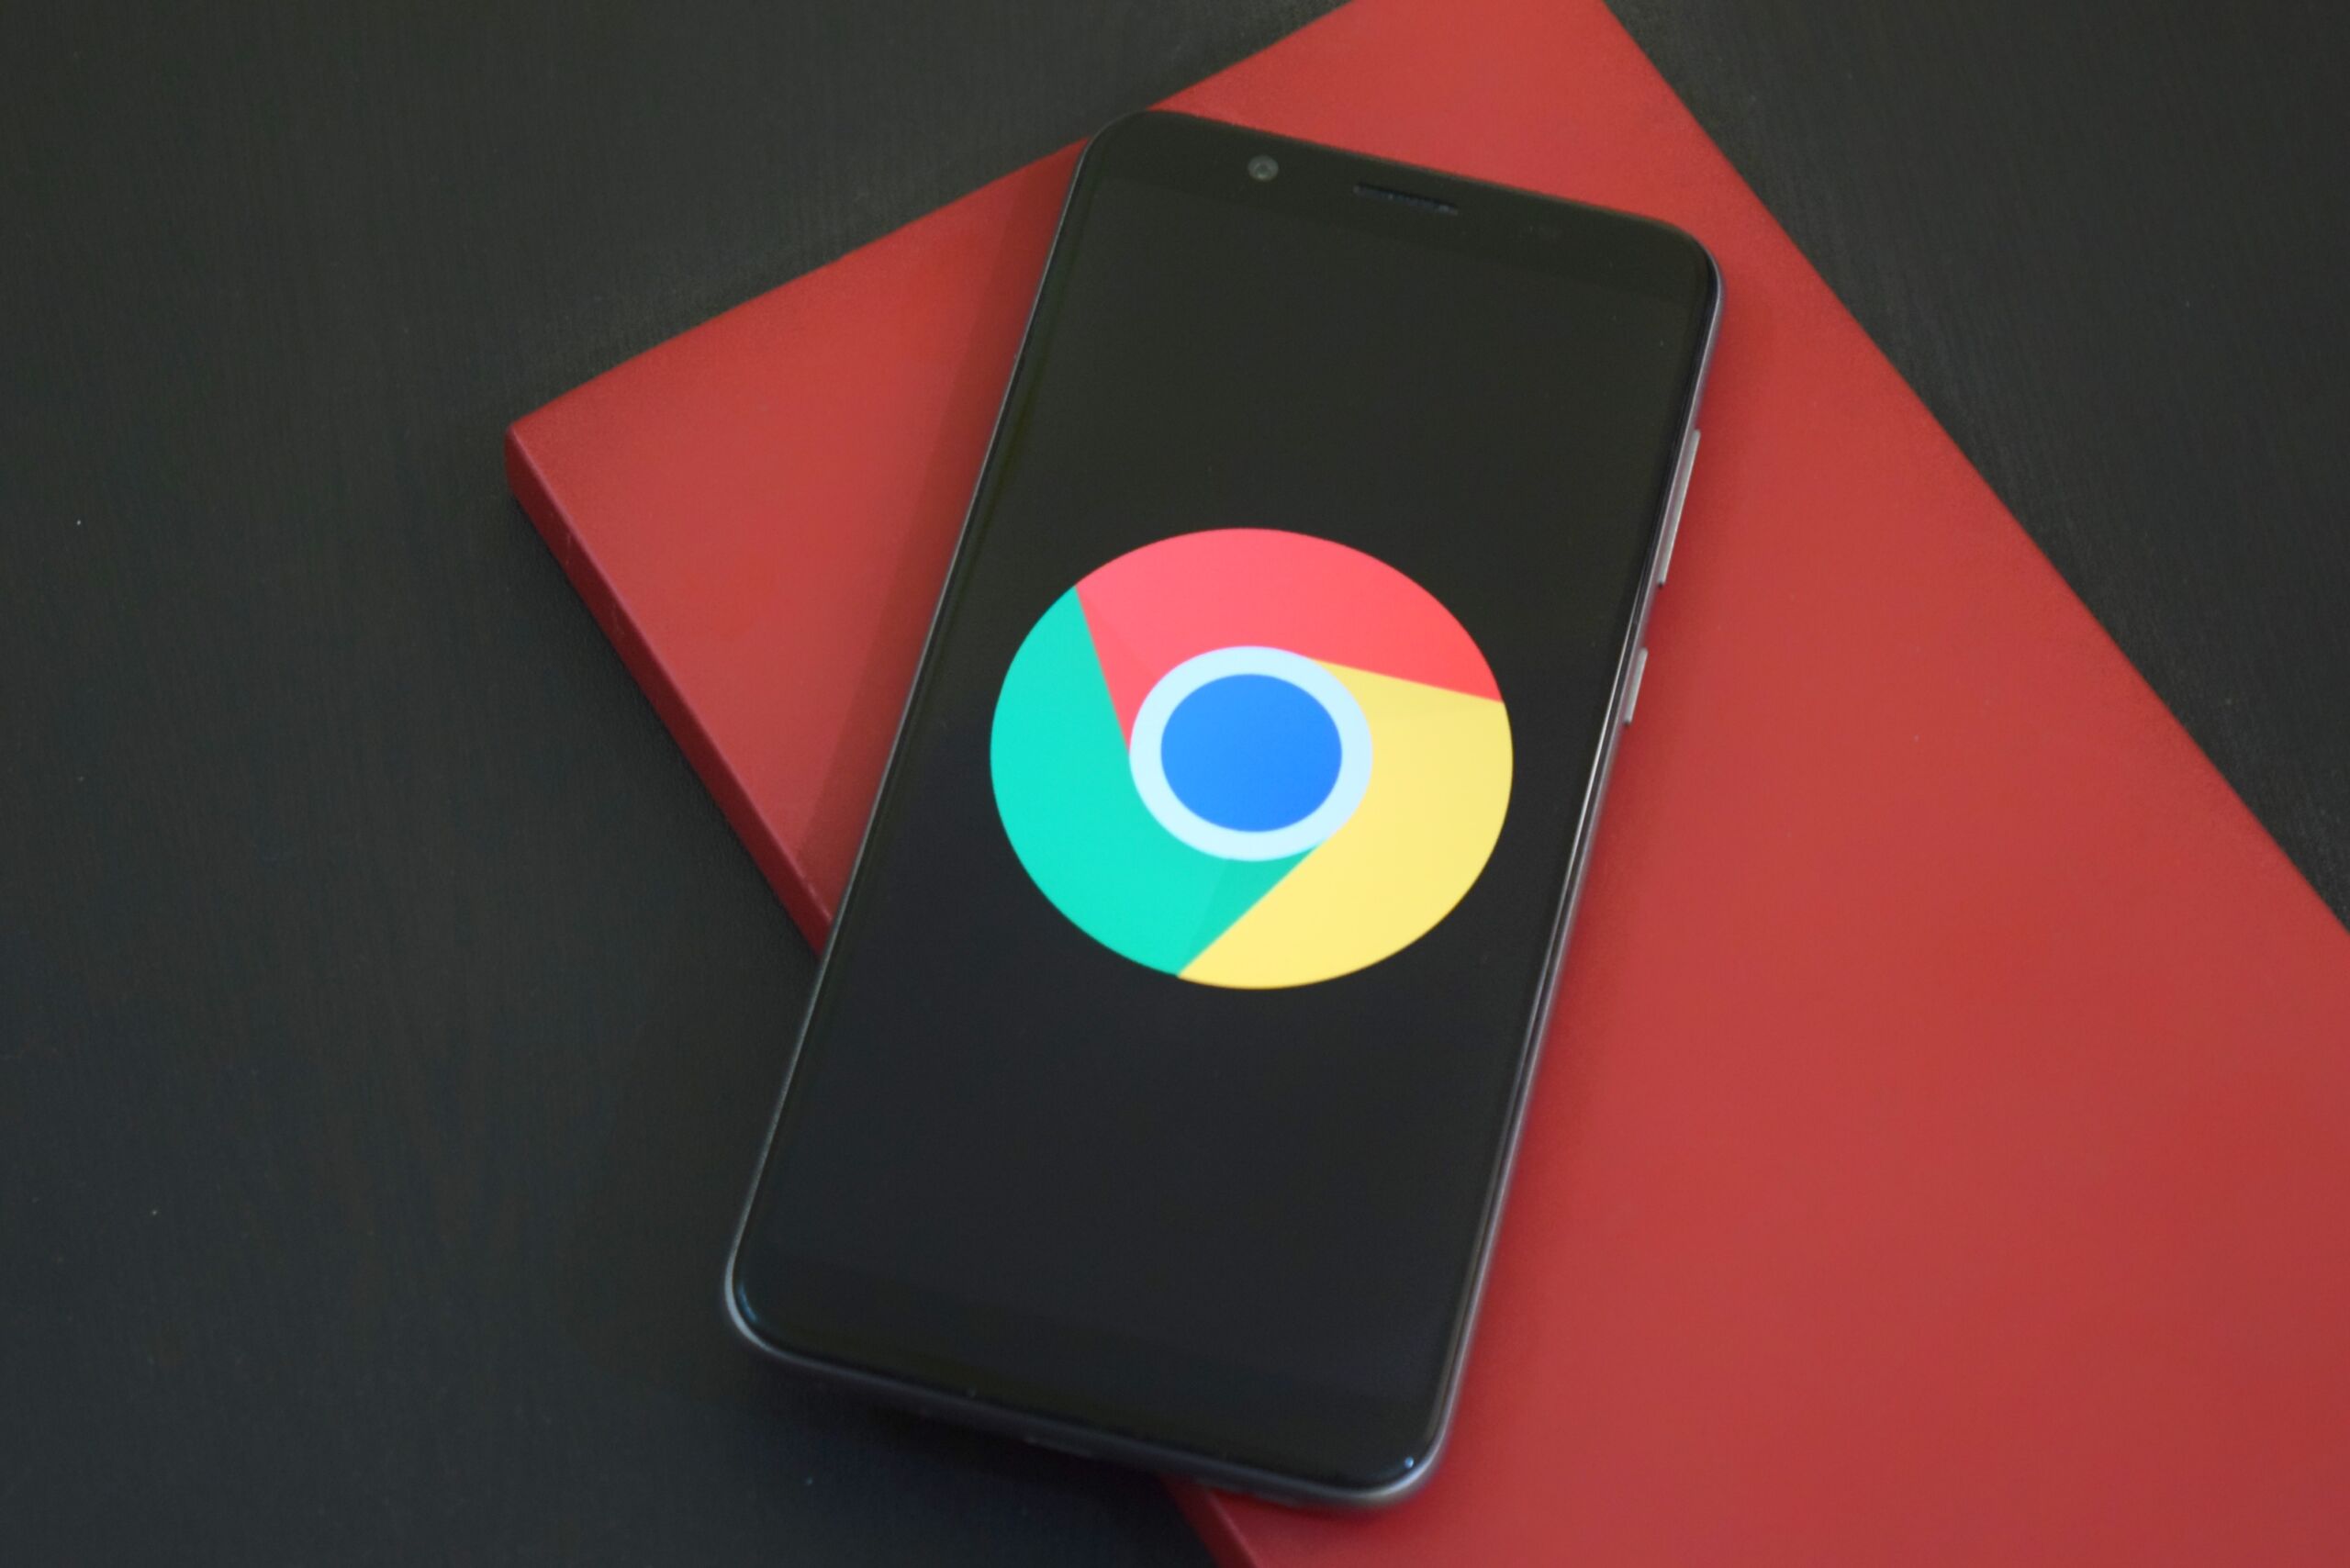 Smartphone displaying the Google logo